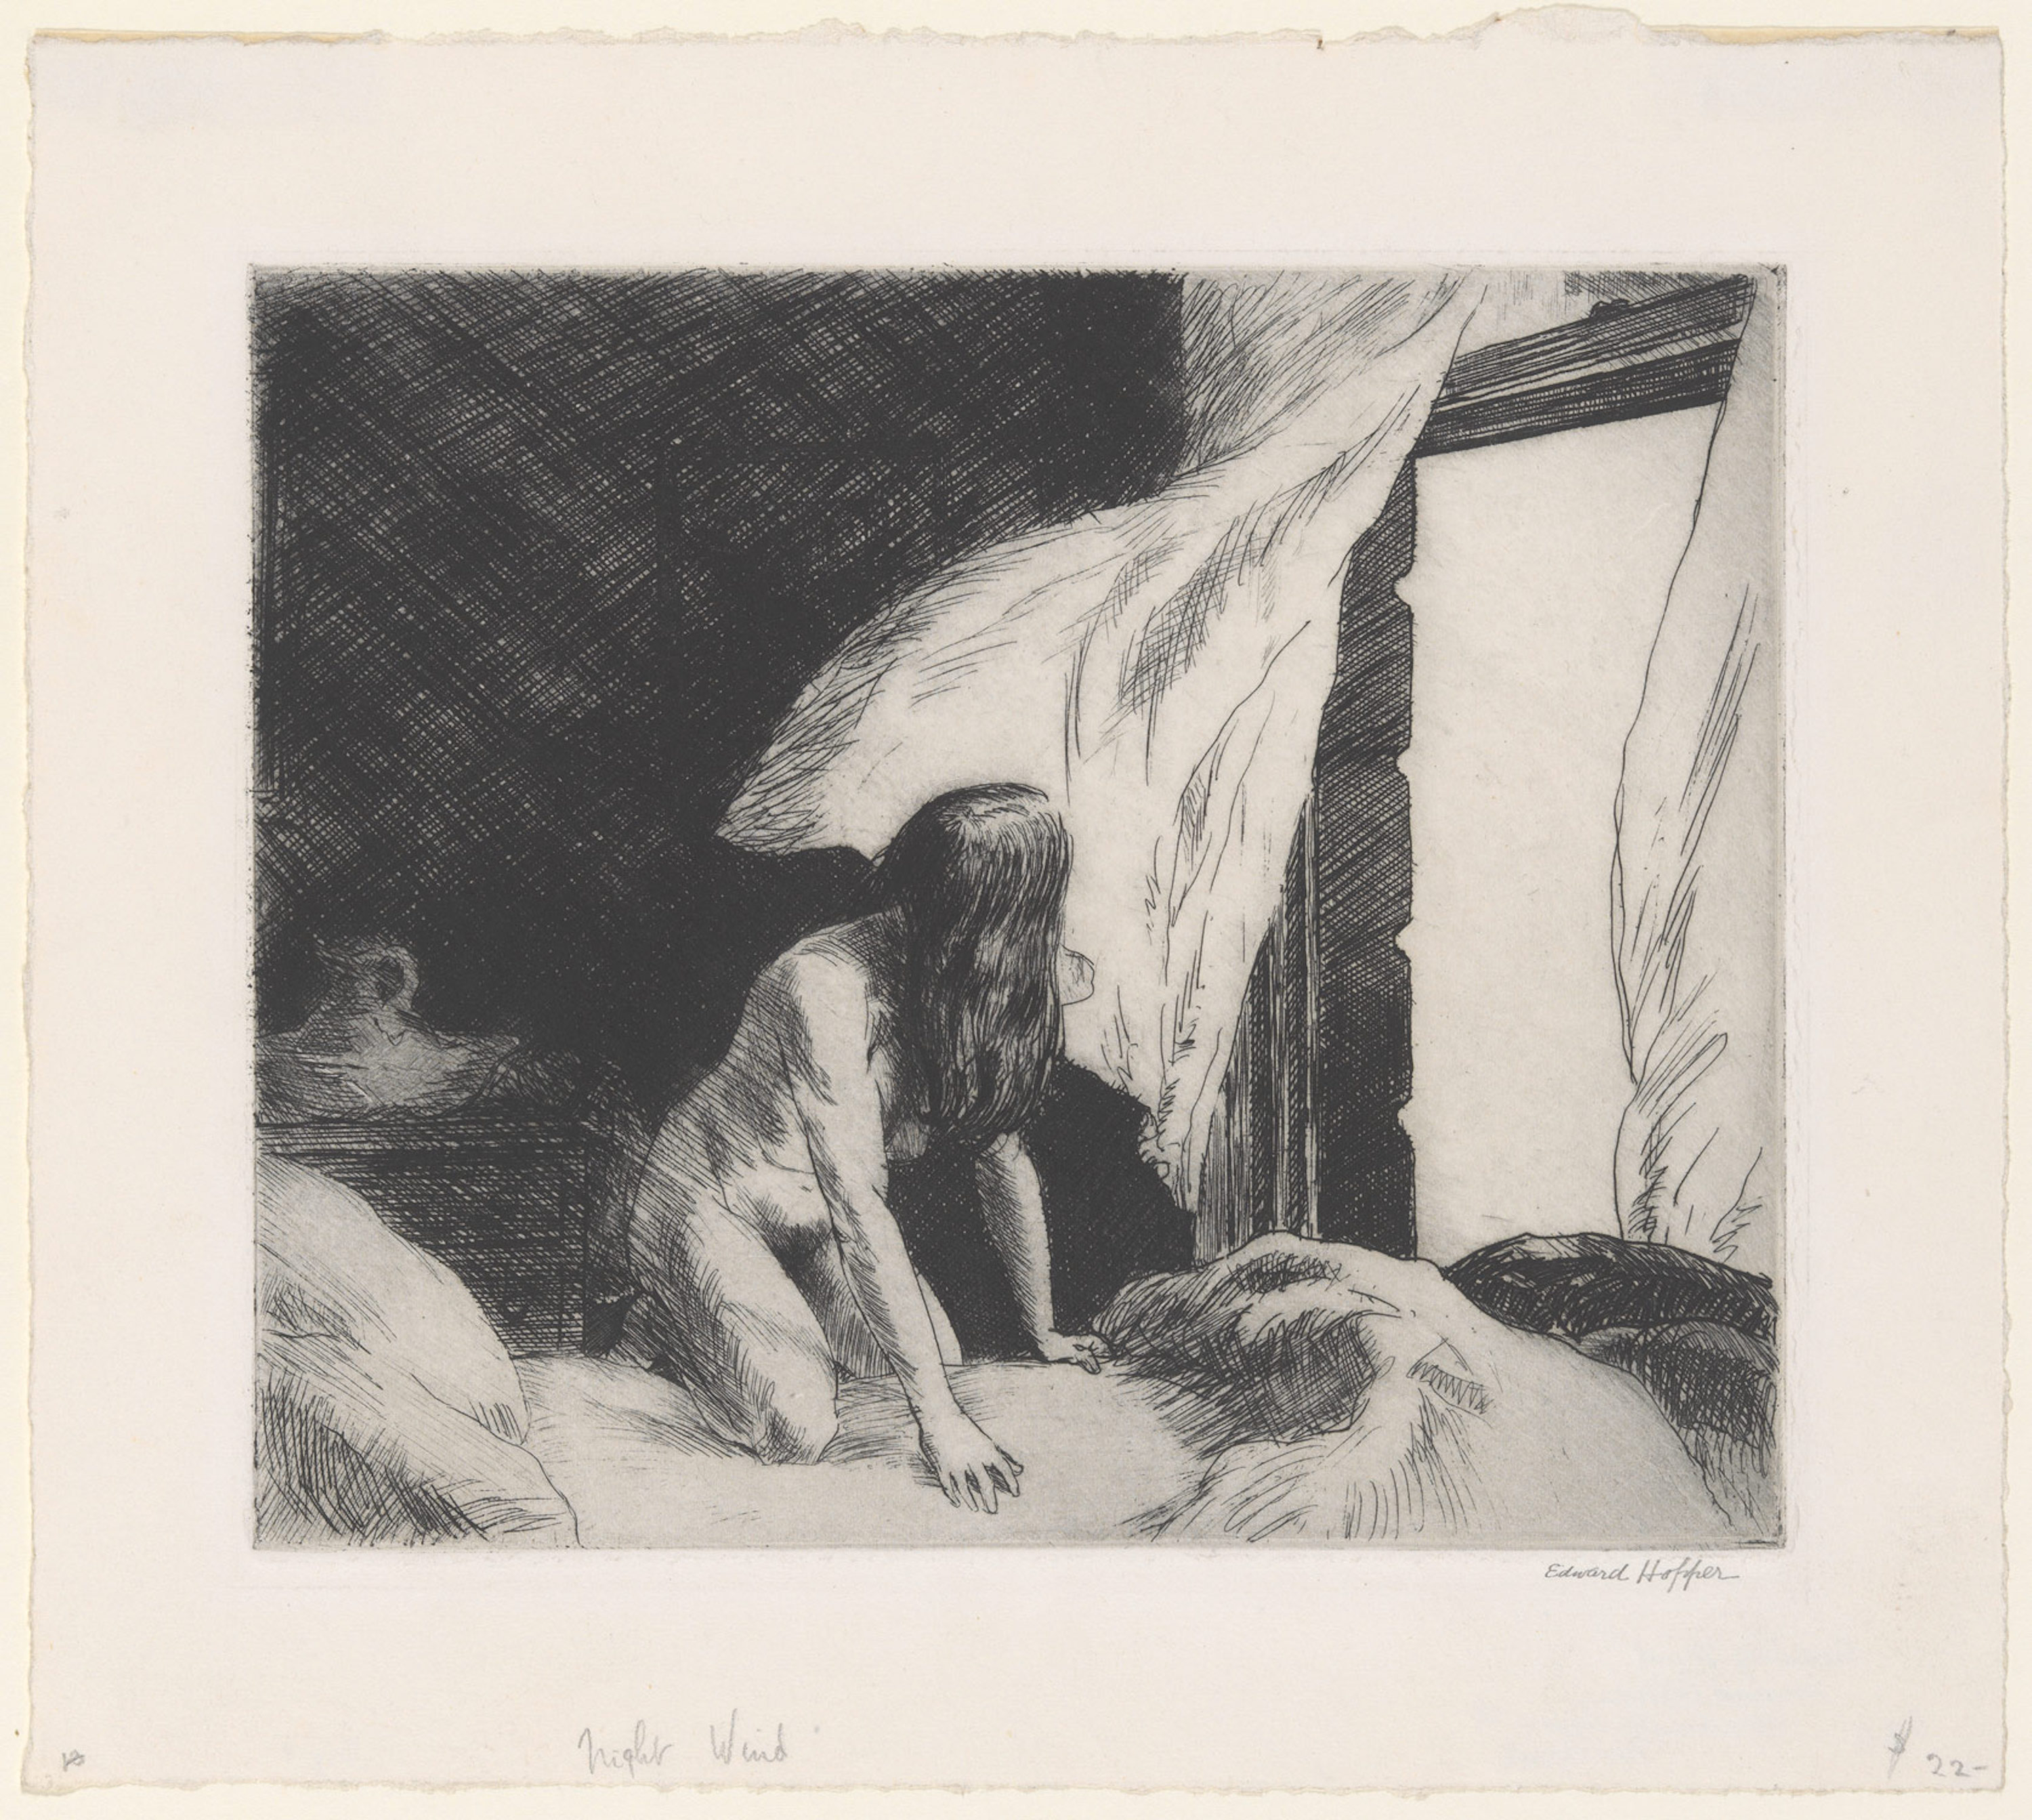 सांध्य बयार by Edward Hopper - १९२१ - १७.६ x २१ सेमि 